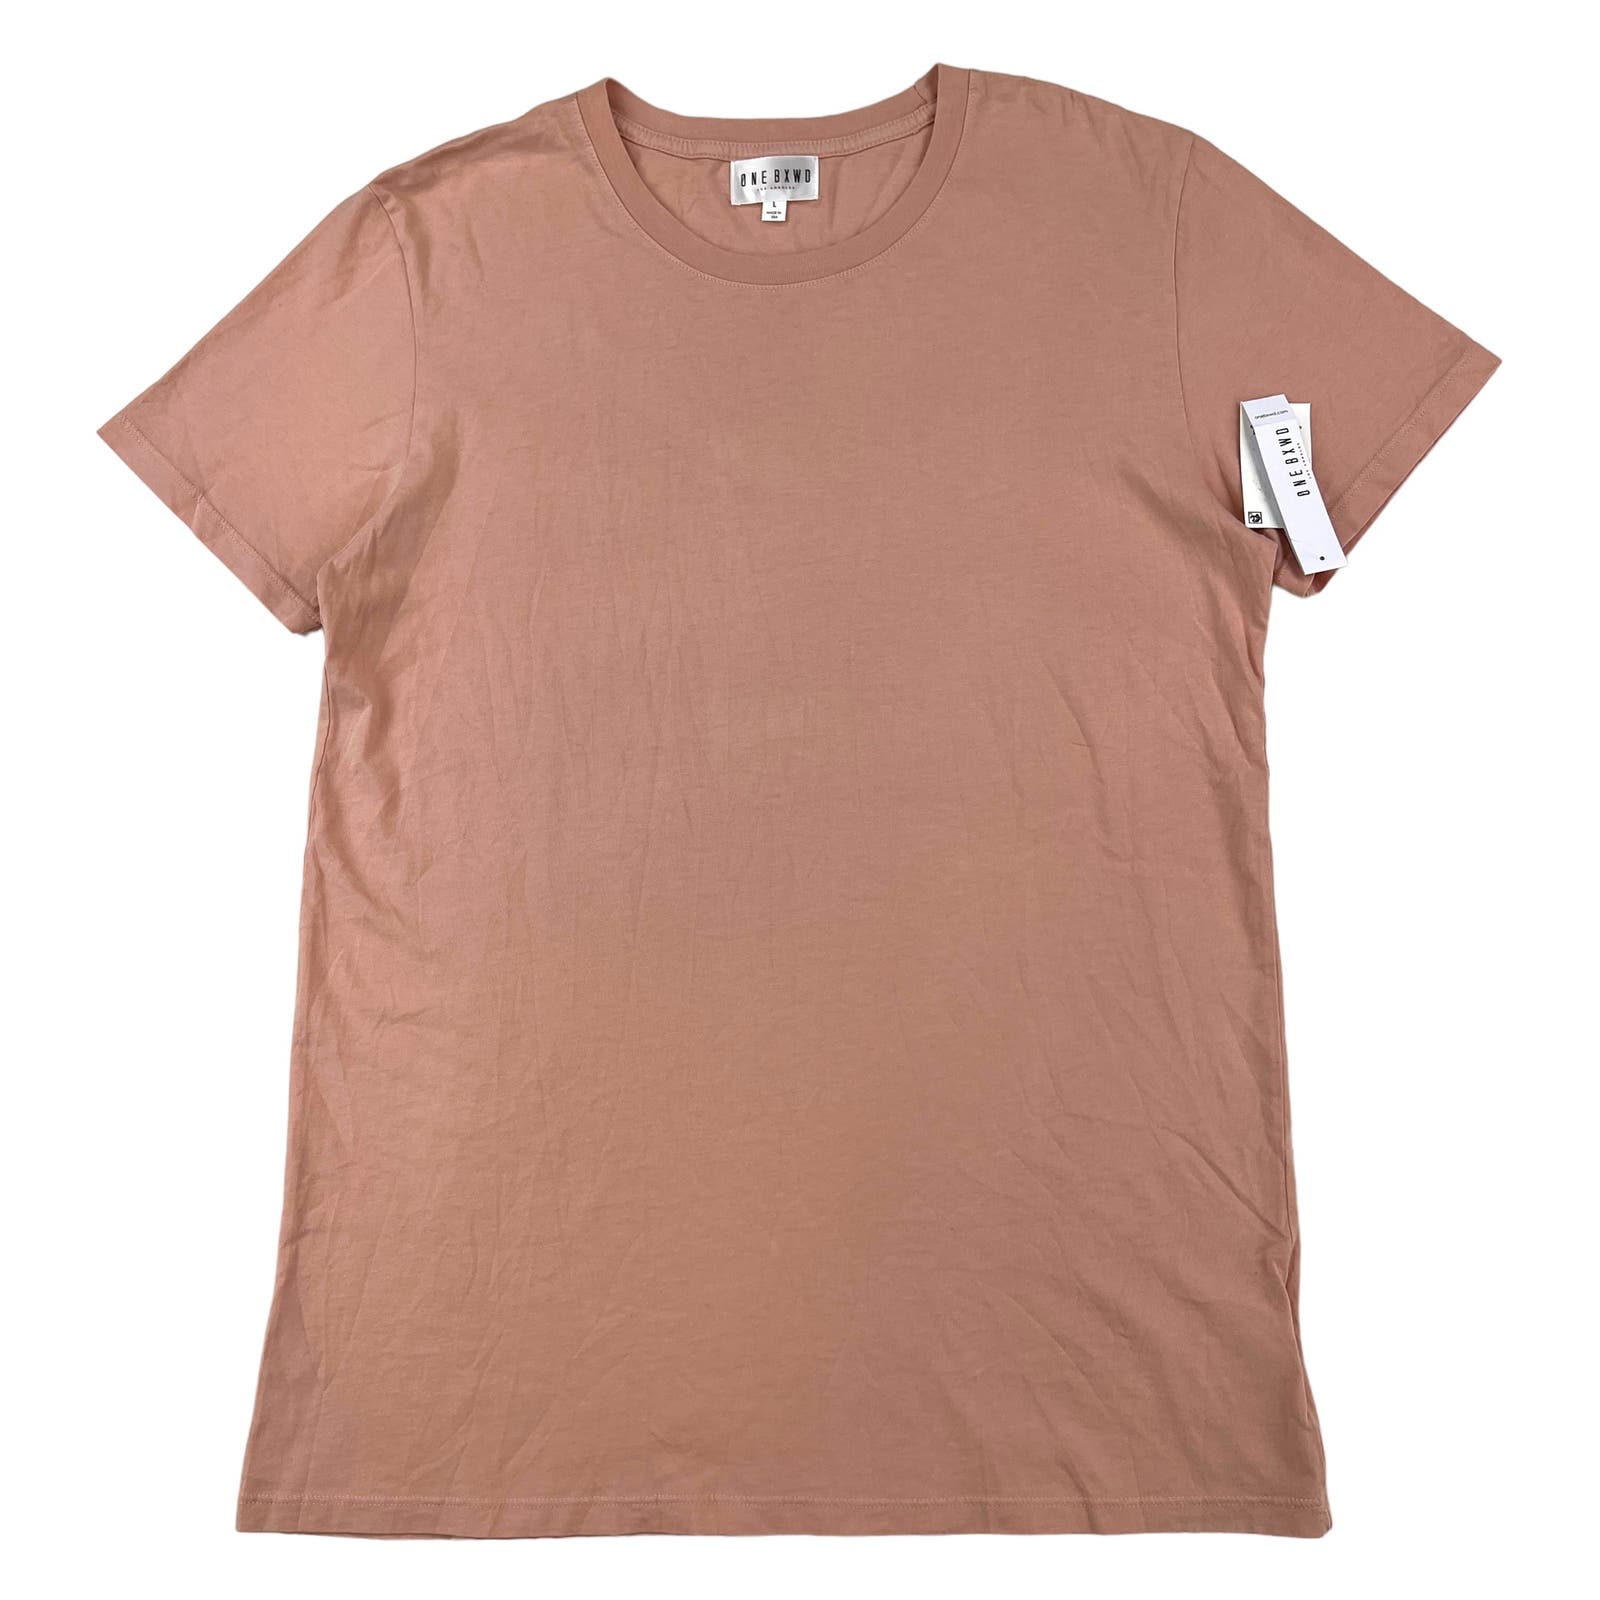 ONE BXWD Los Angeles Men US L Salmon Pink Cotton T-Shirt